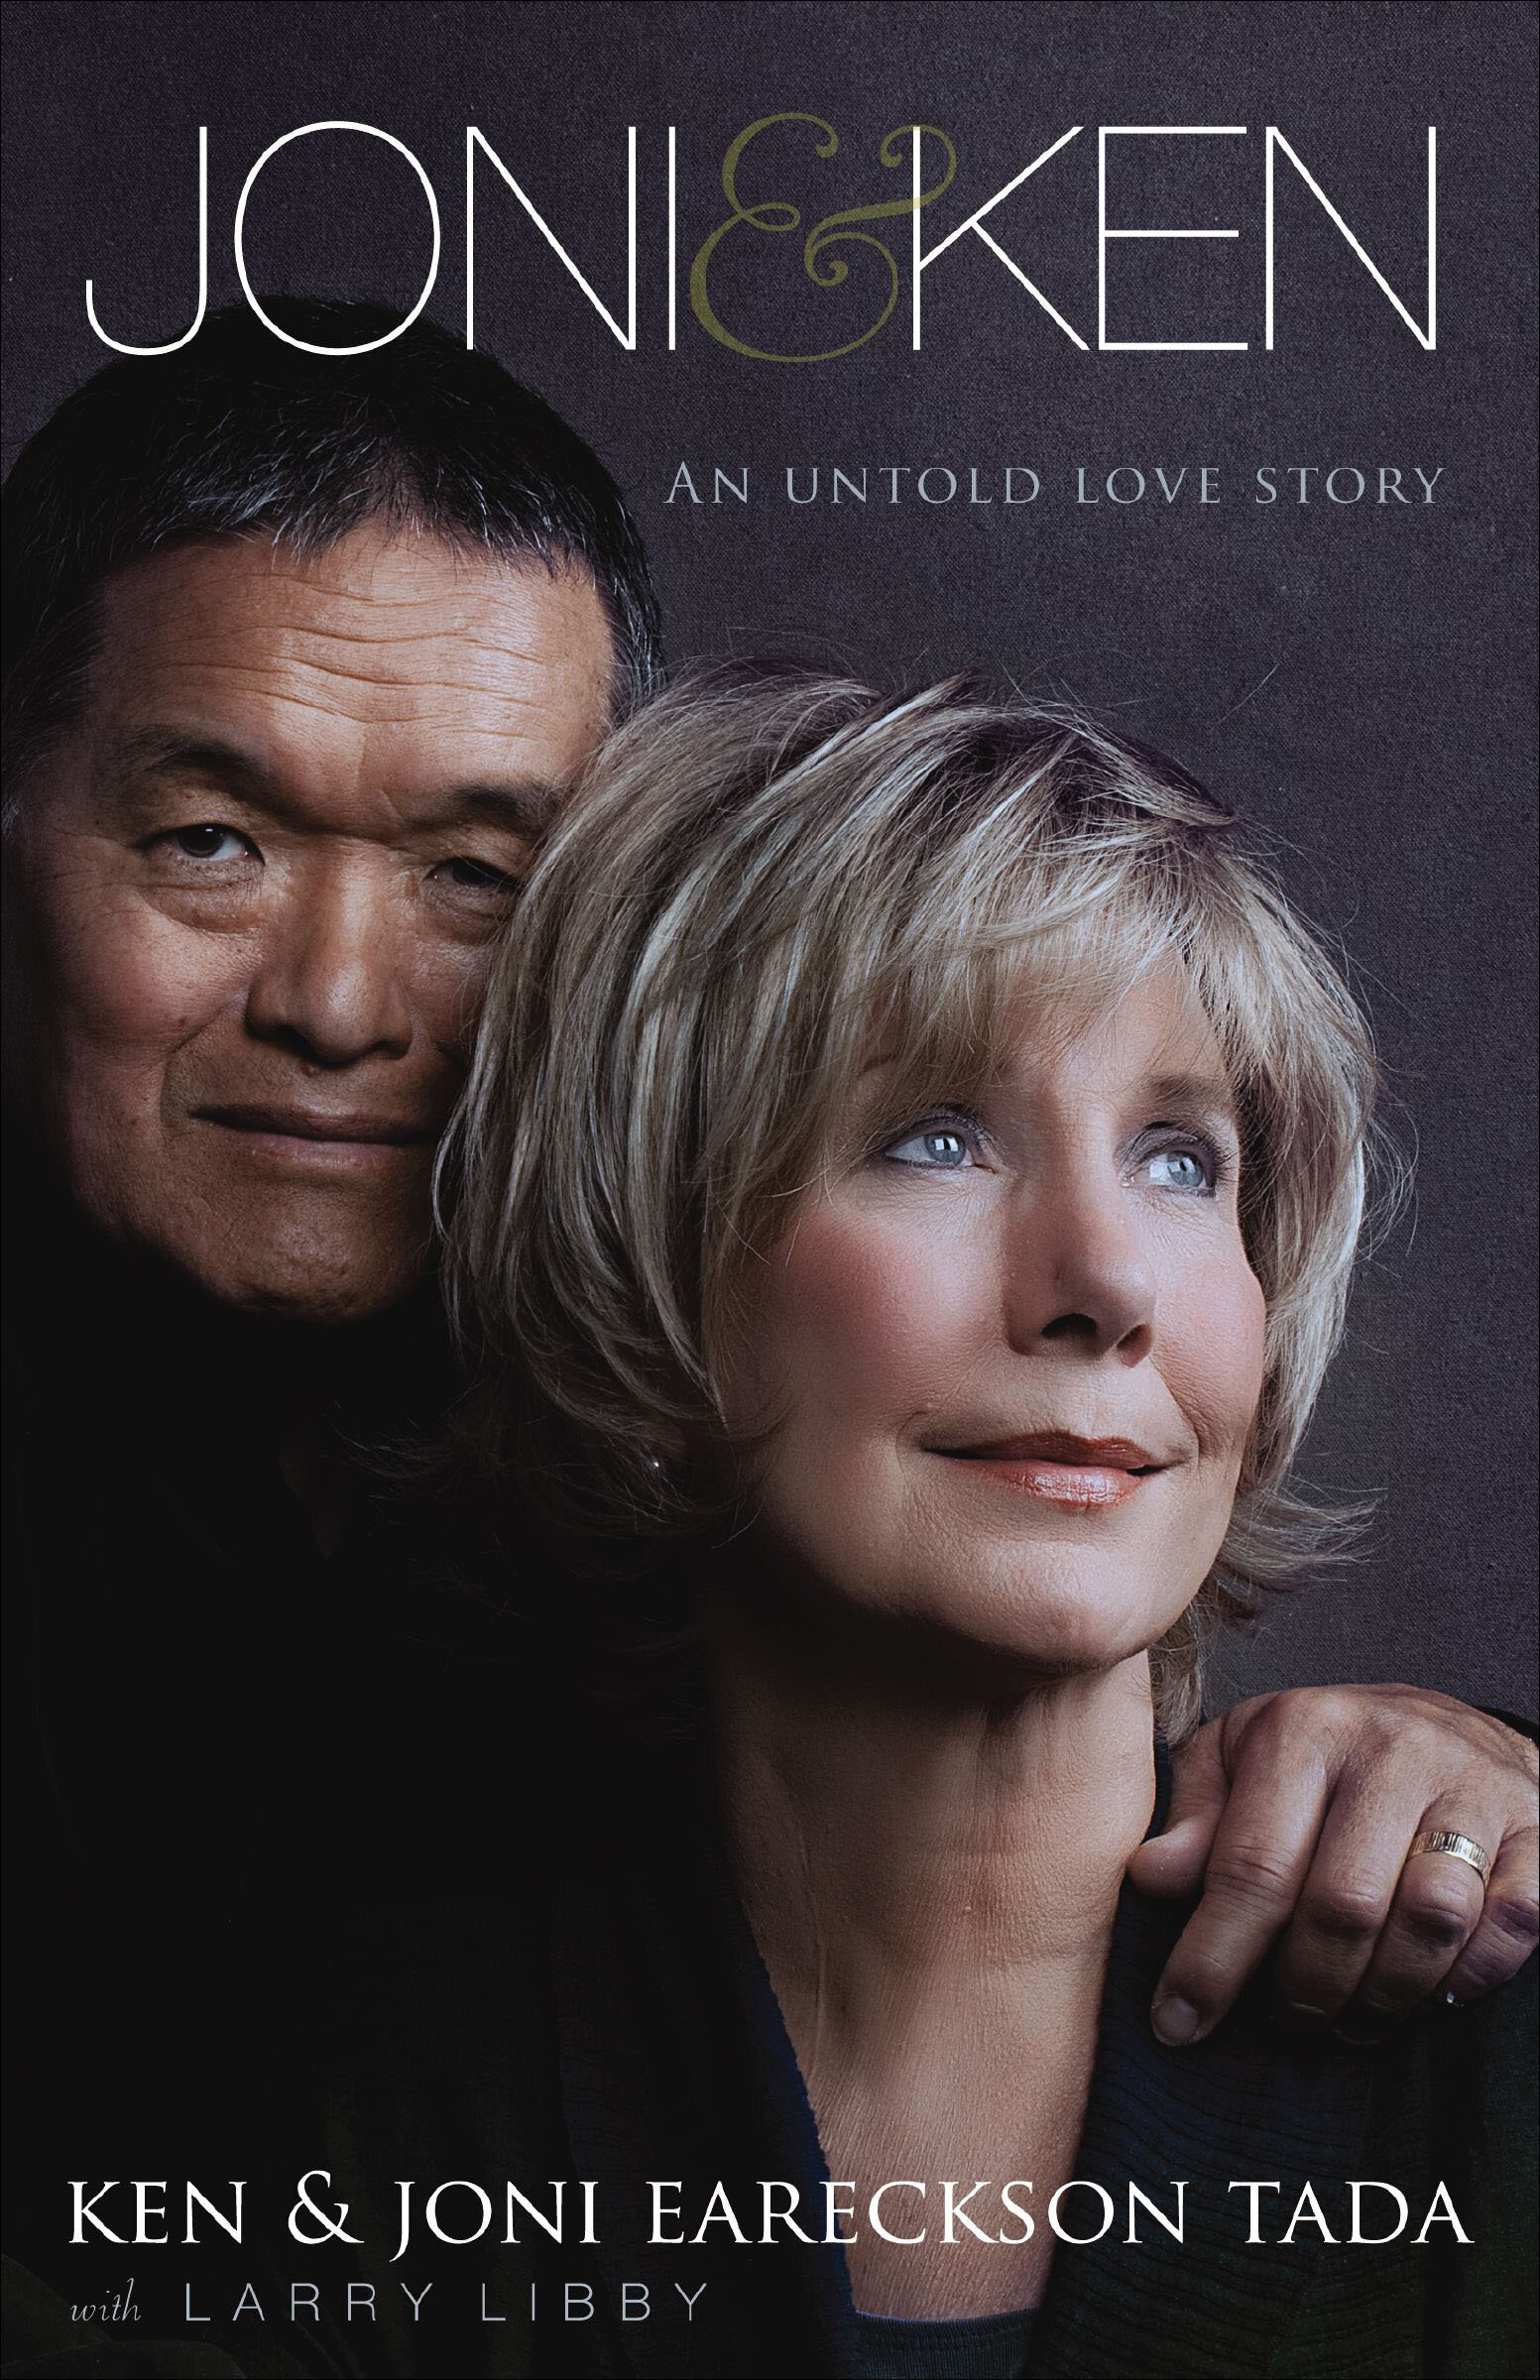 Joni and Ken: An Untold Love Story